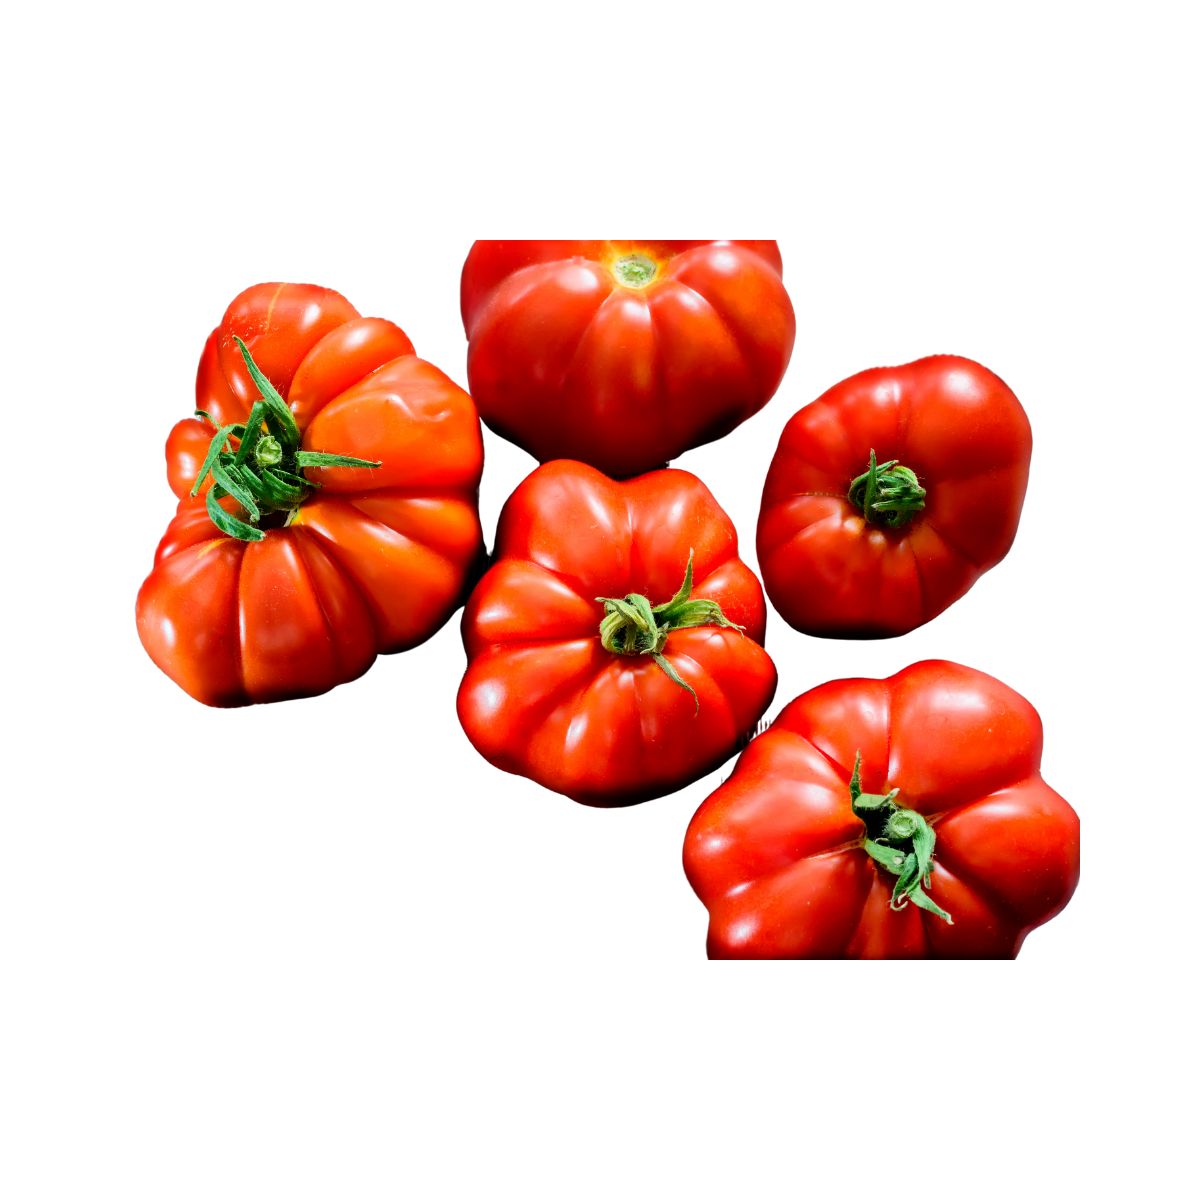 Tomate - Seminte de tomate Marmande, 10 grame, hectarul.ro